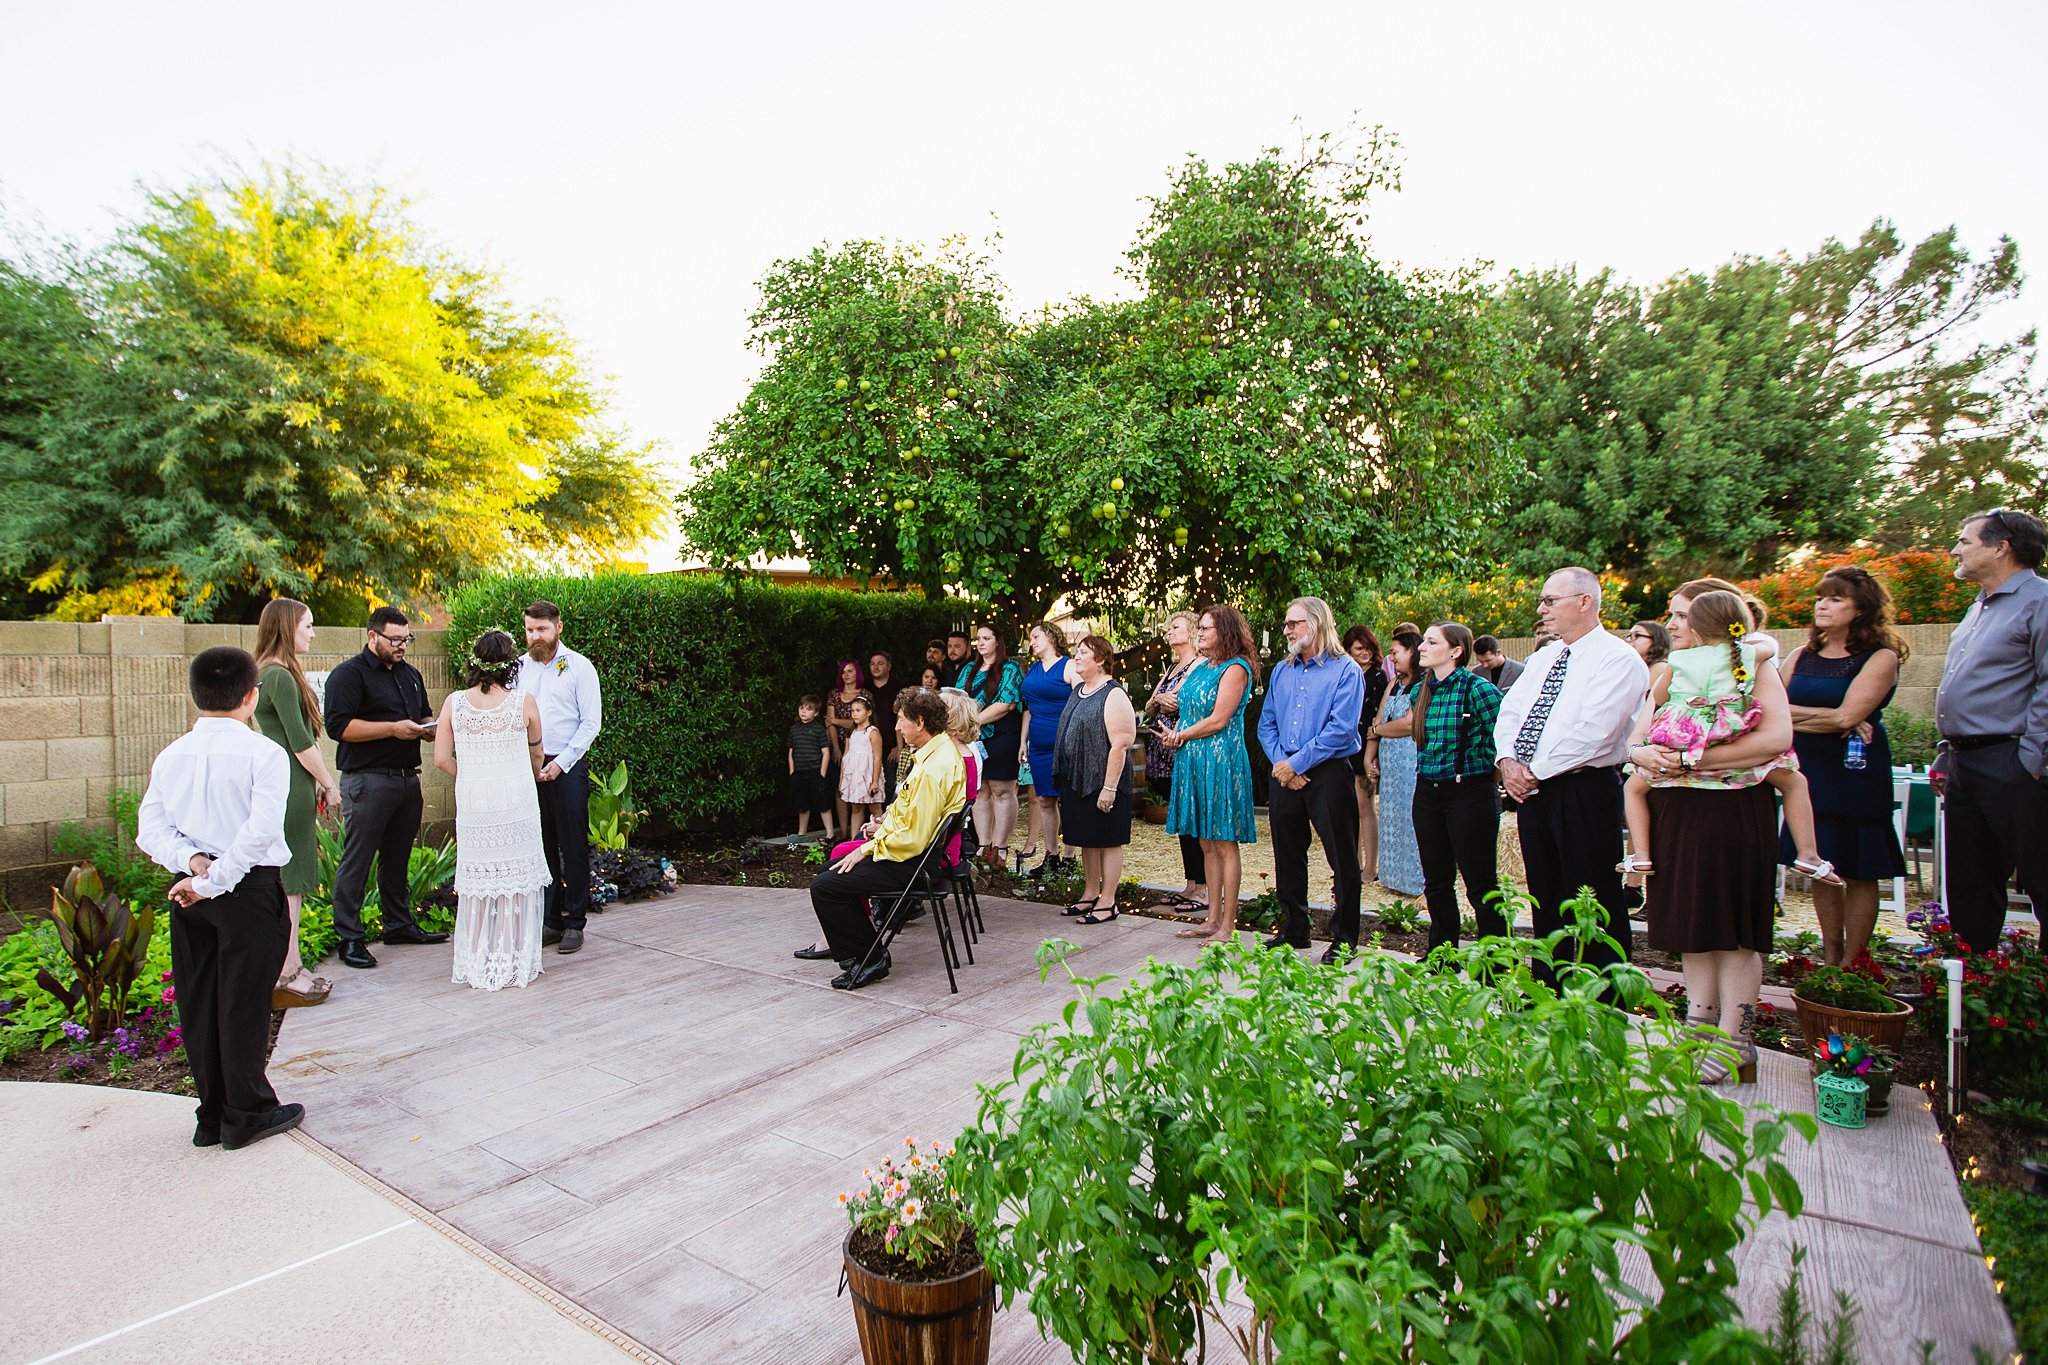 Small intimate backyard garden wedding ceremony by Phoenix wedding photographer PMA Photography.